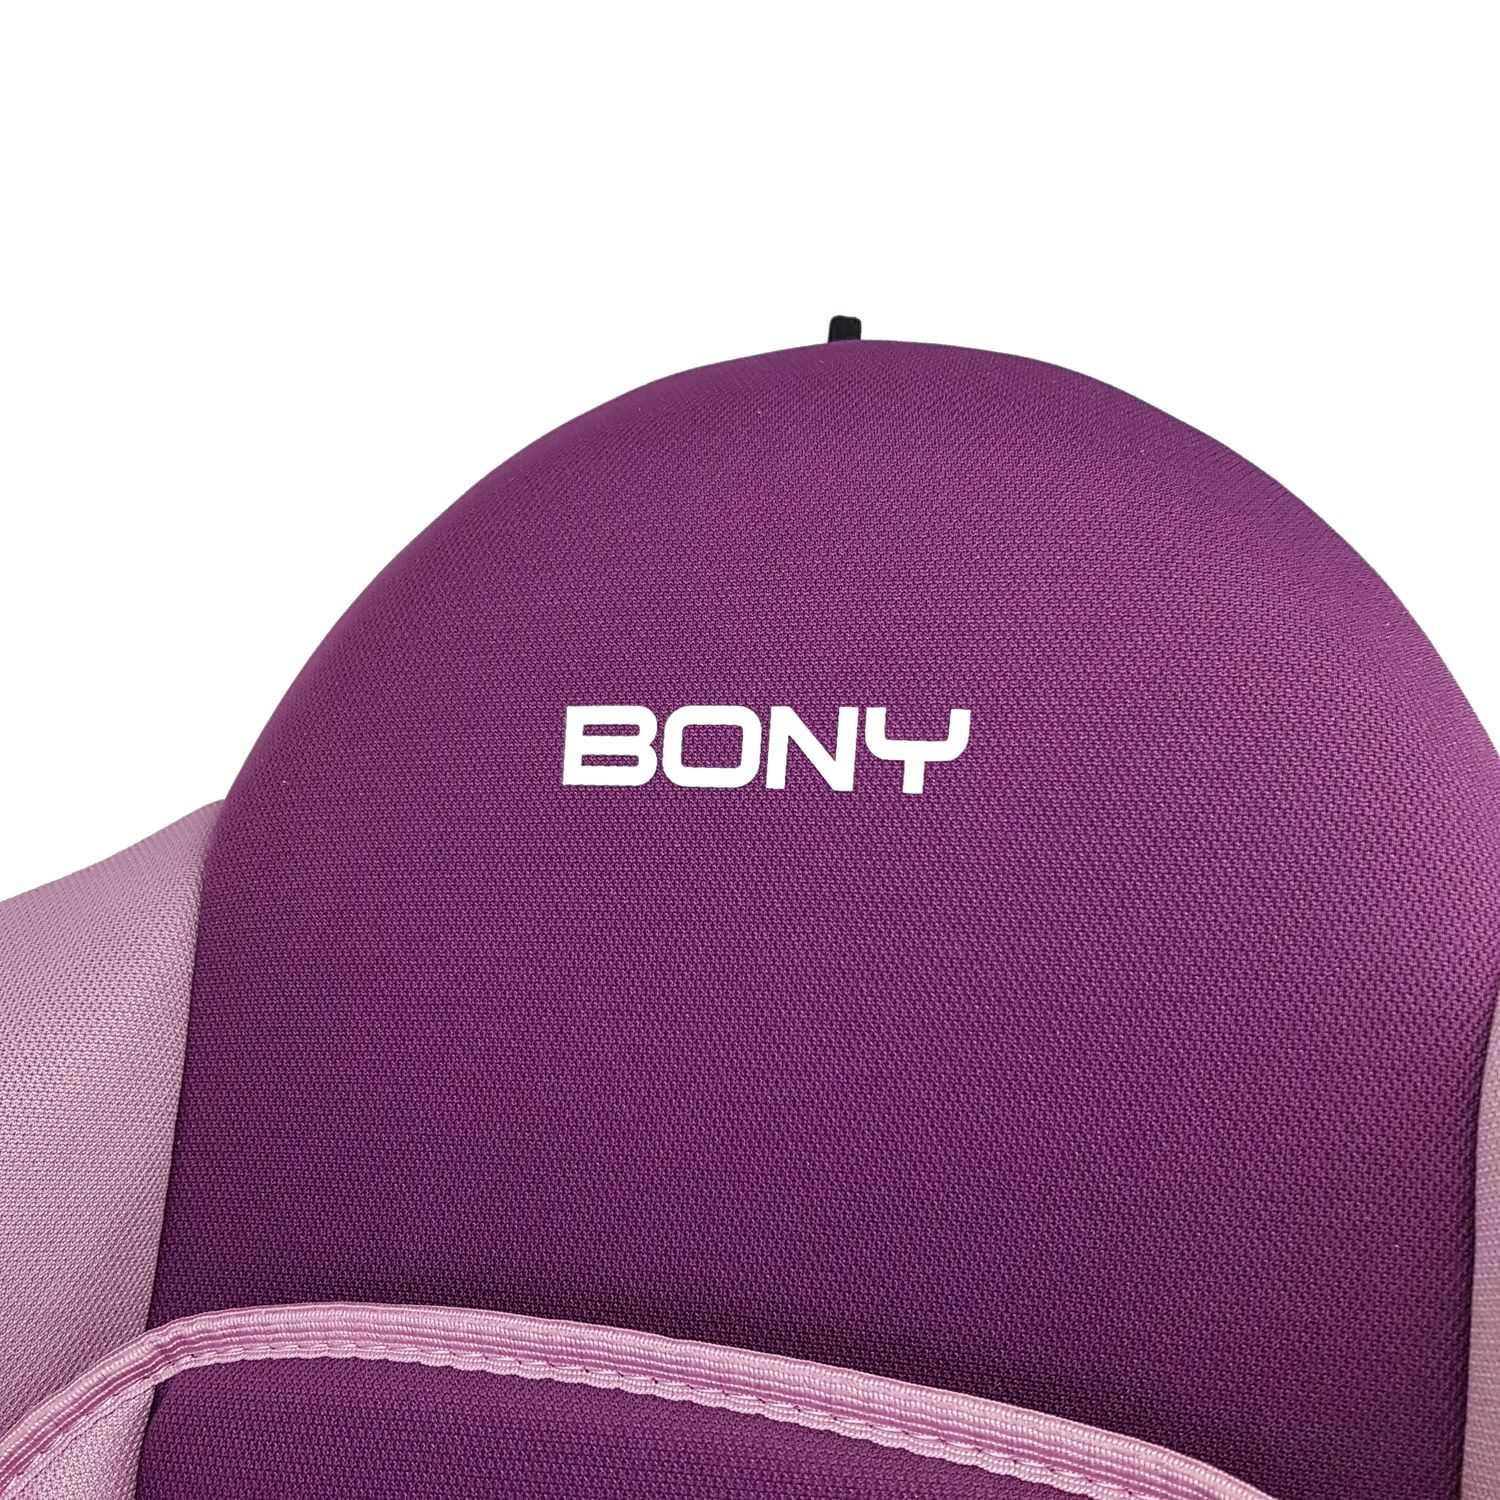 Автокресло Babyton Bony I/II Purple - фото 10